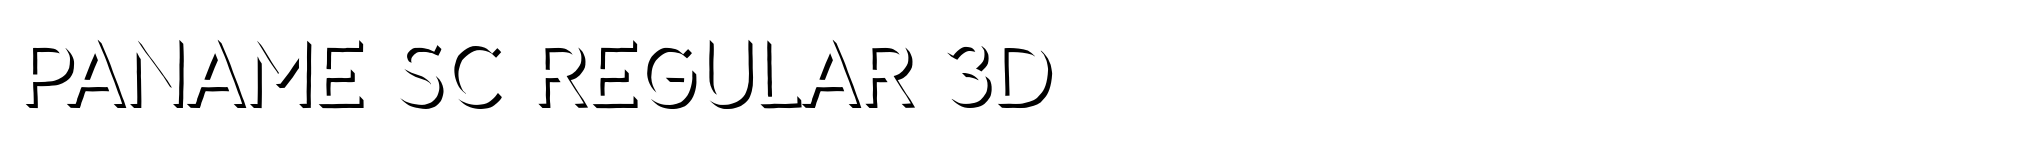 Paname SC Regular 3D image